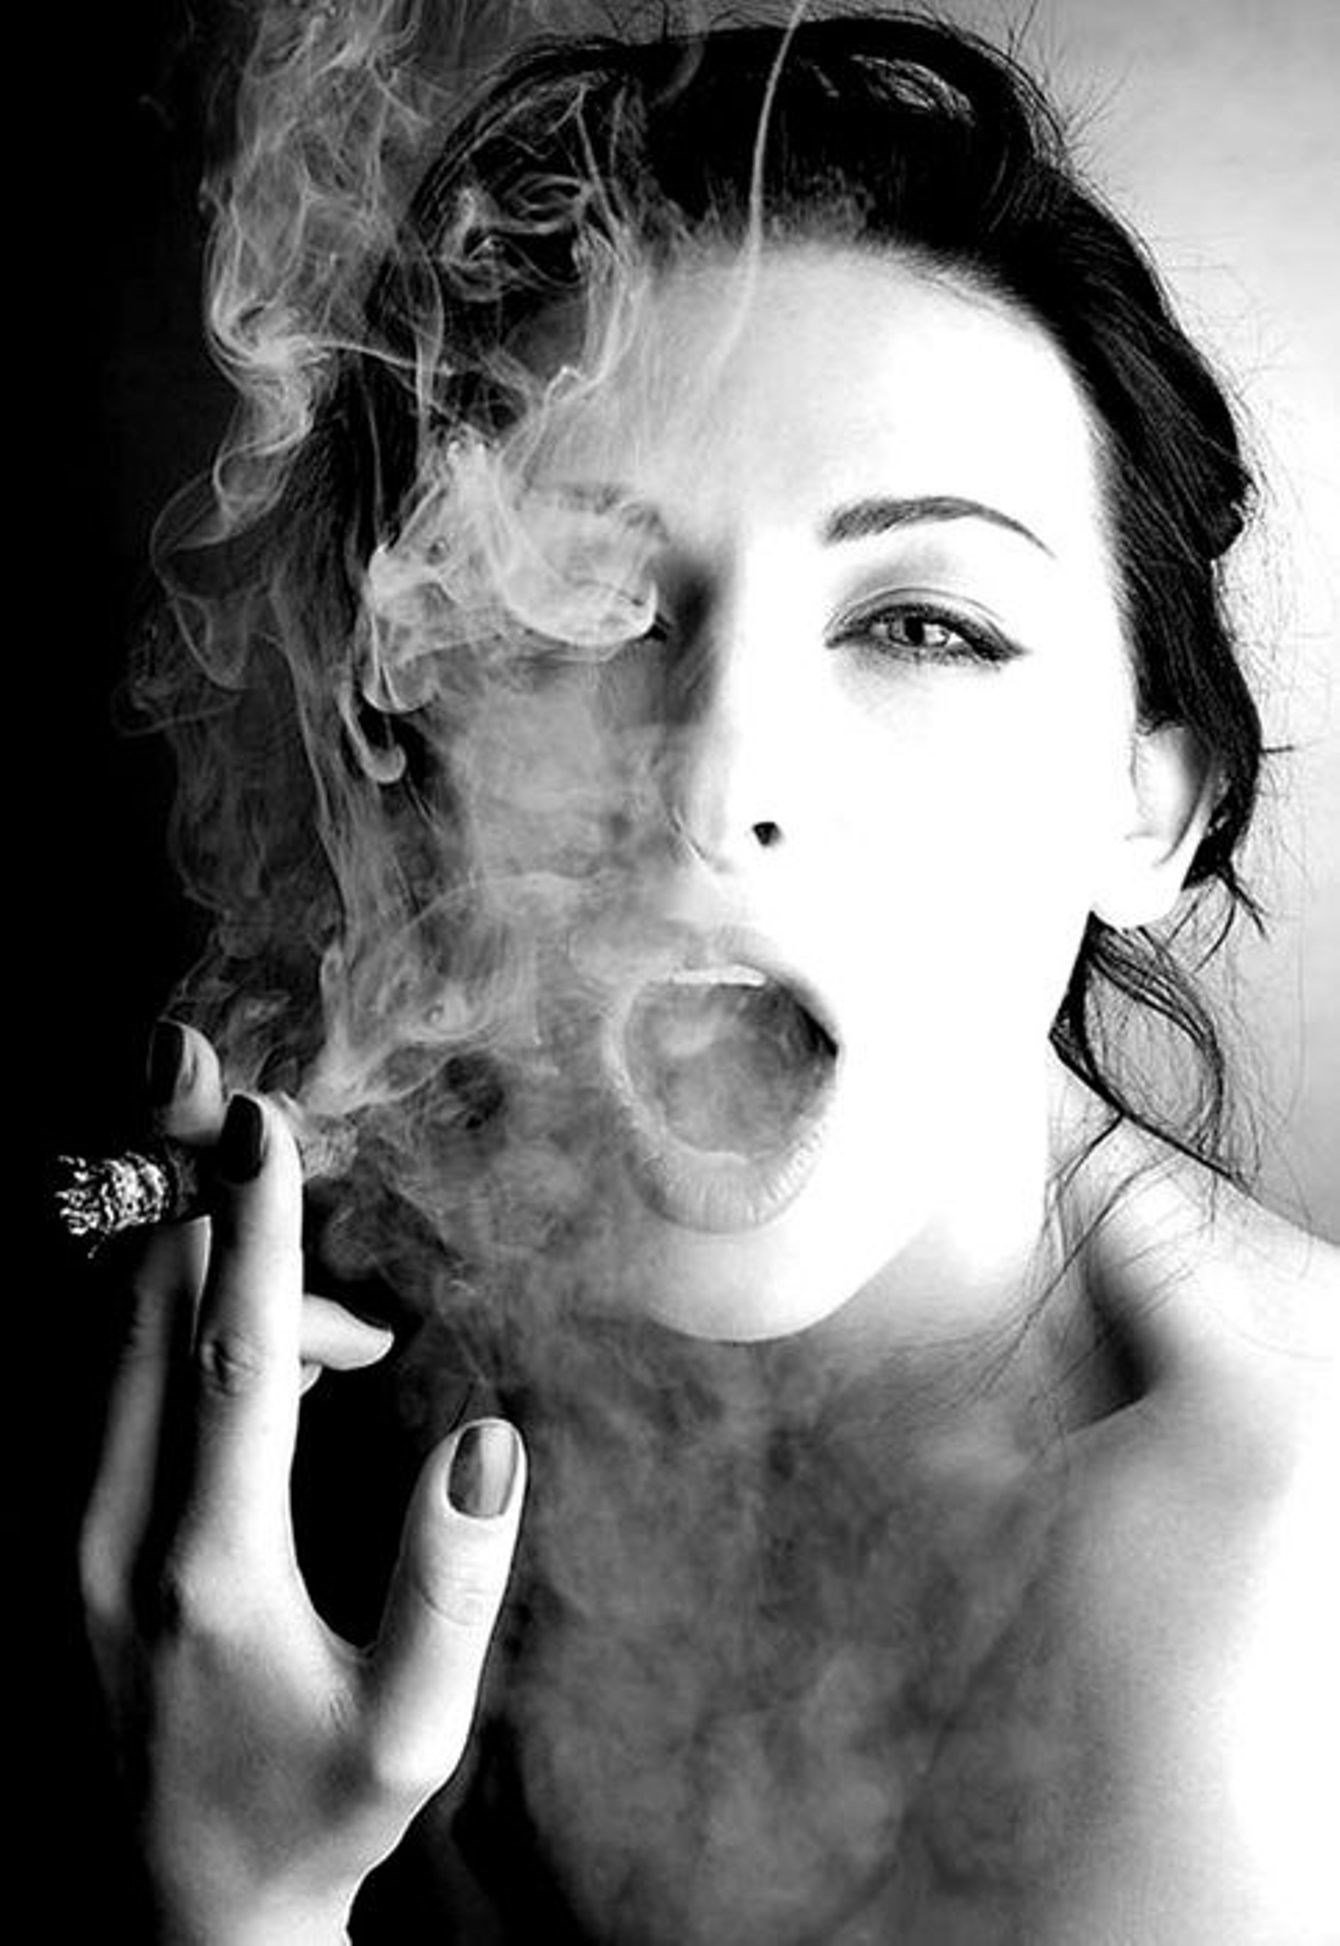 Girl smoking thin cigarettes images